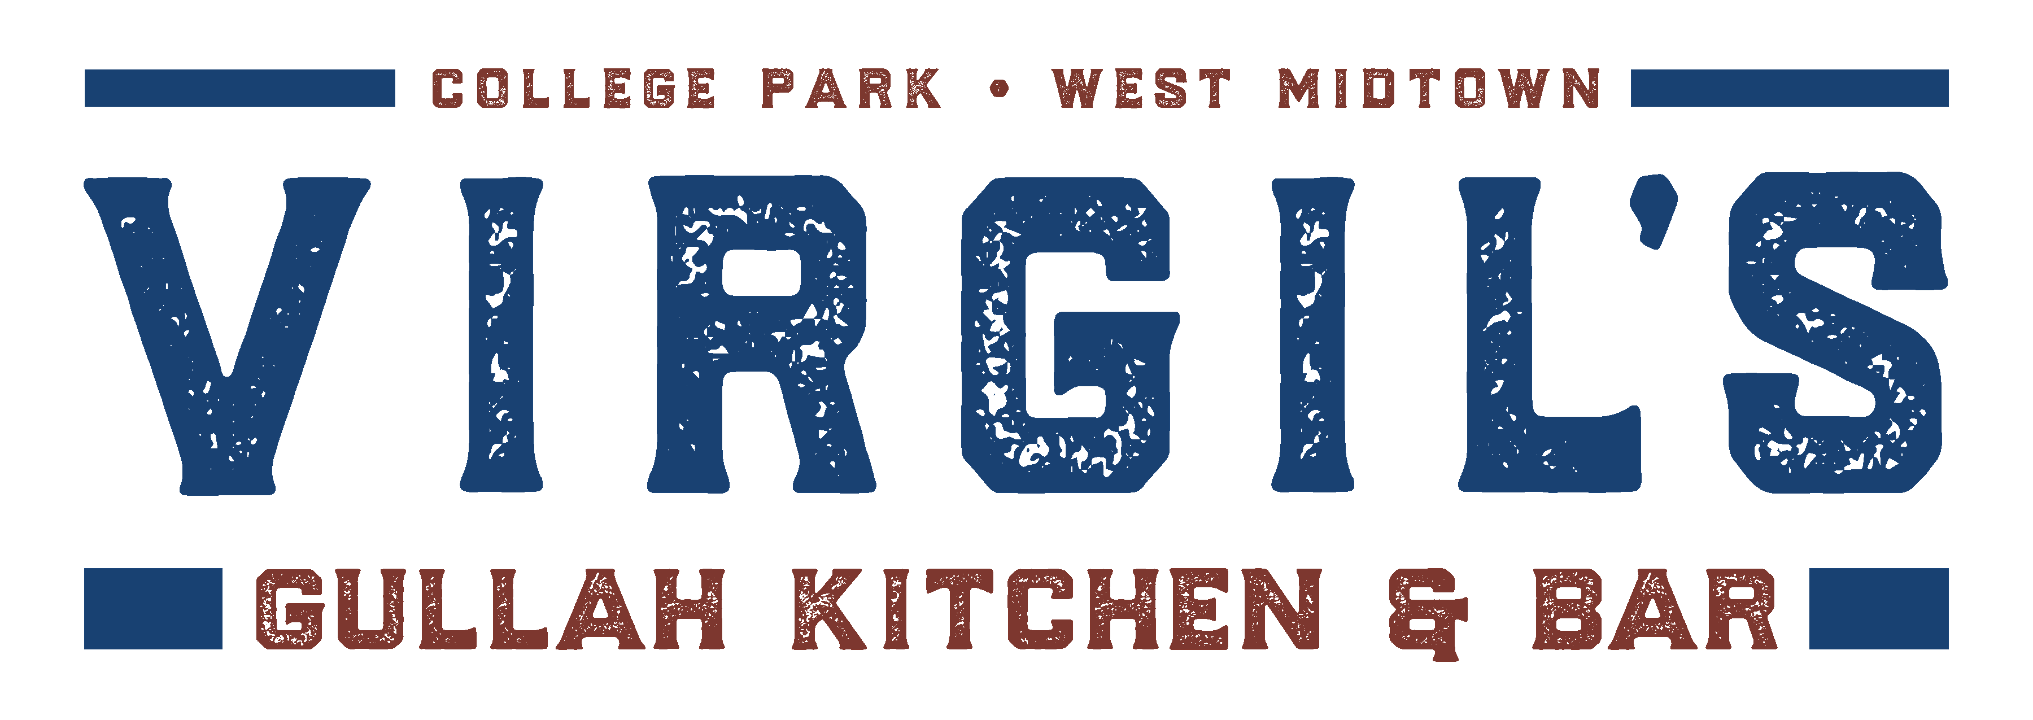 Virgils Gullah Kitchen & Bar logo